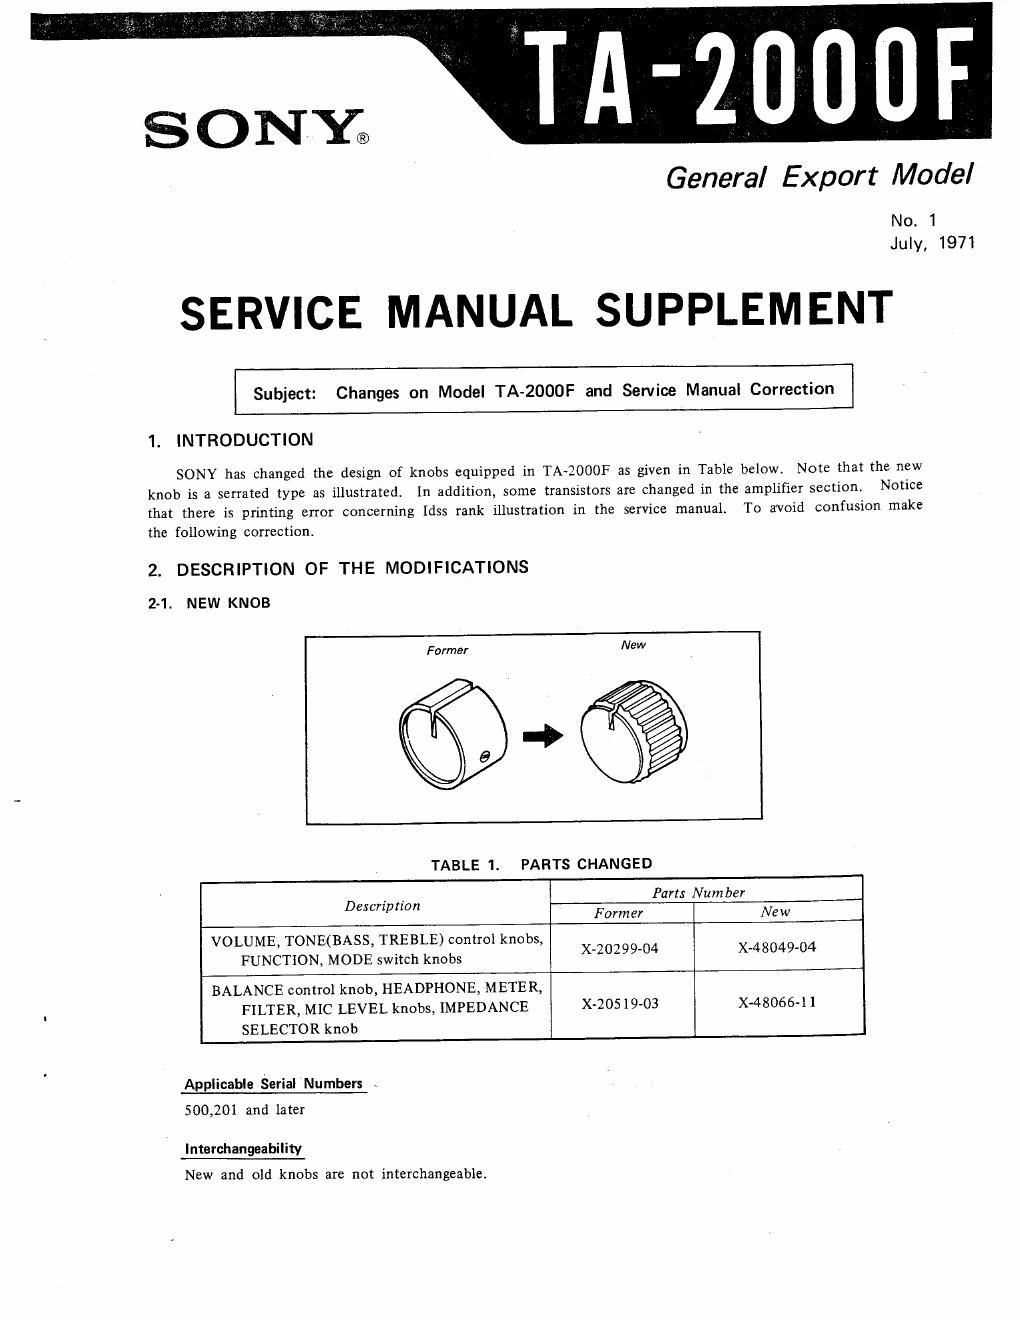 Sony TA 2000F Service Manual Supplement